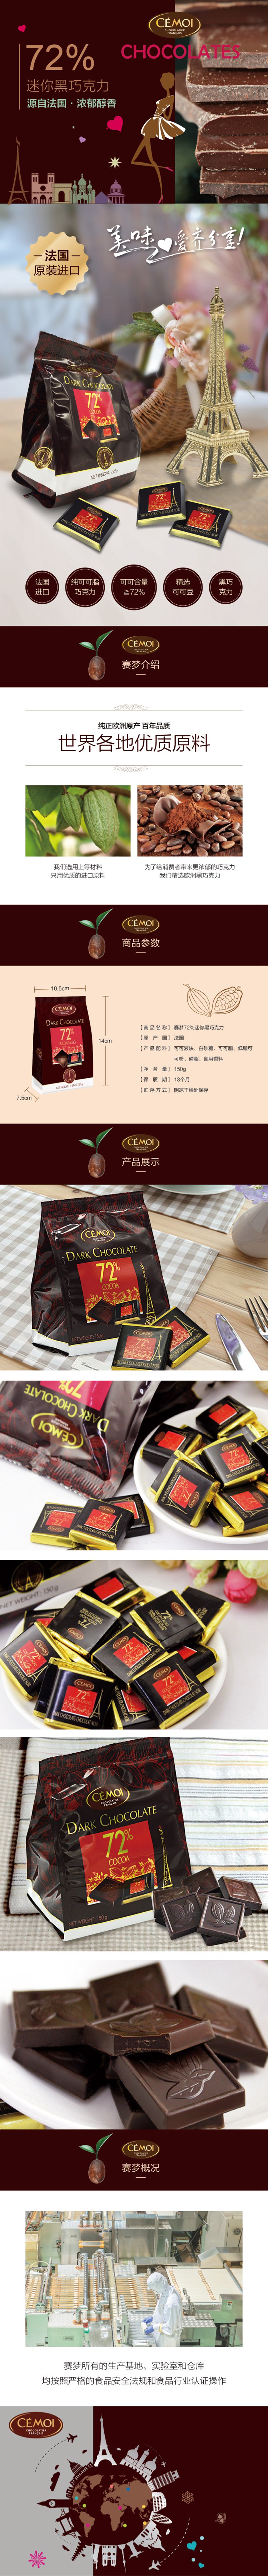 CEMOI赛梦 72％迷你黑巧克力 法国进口  150g 袋装